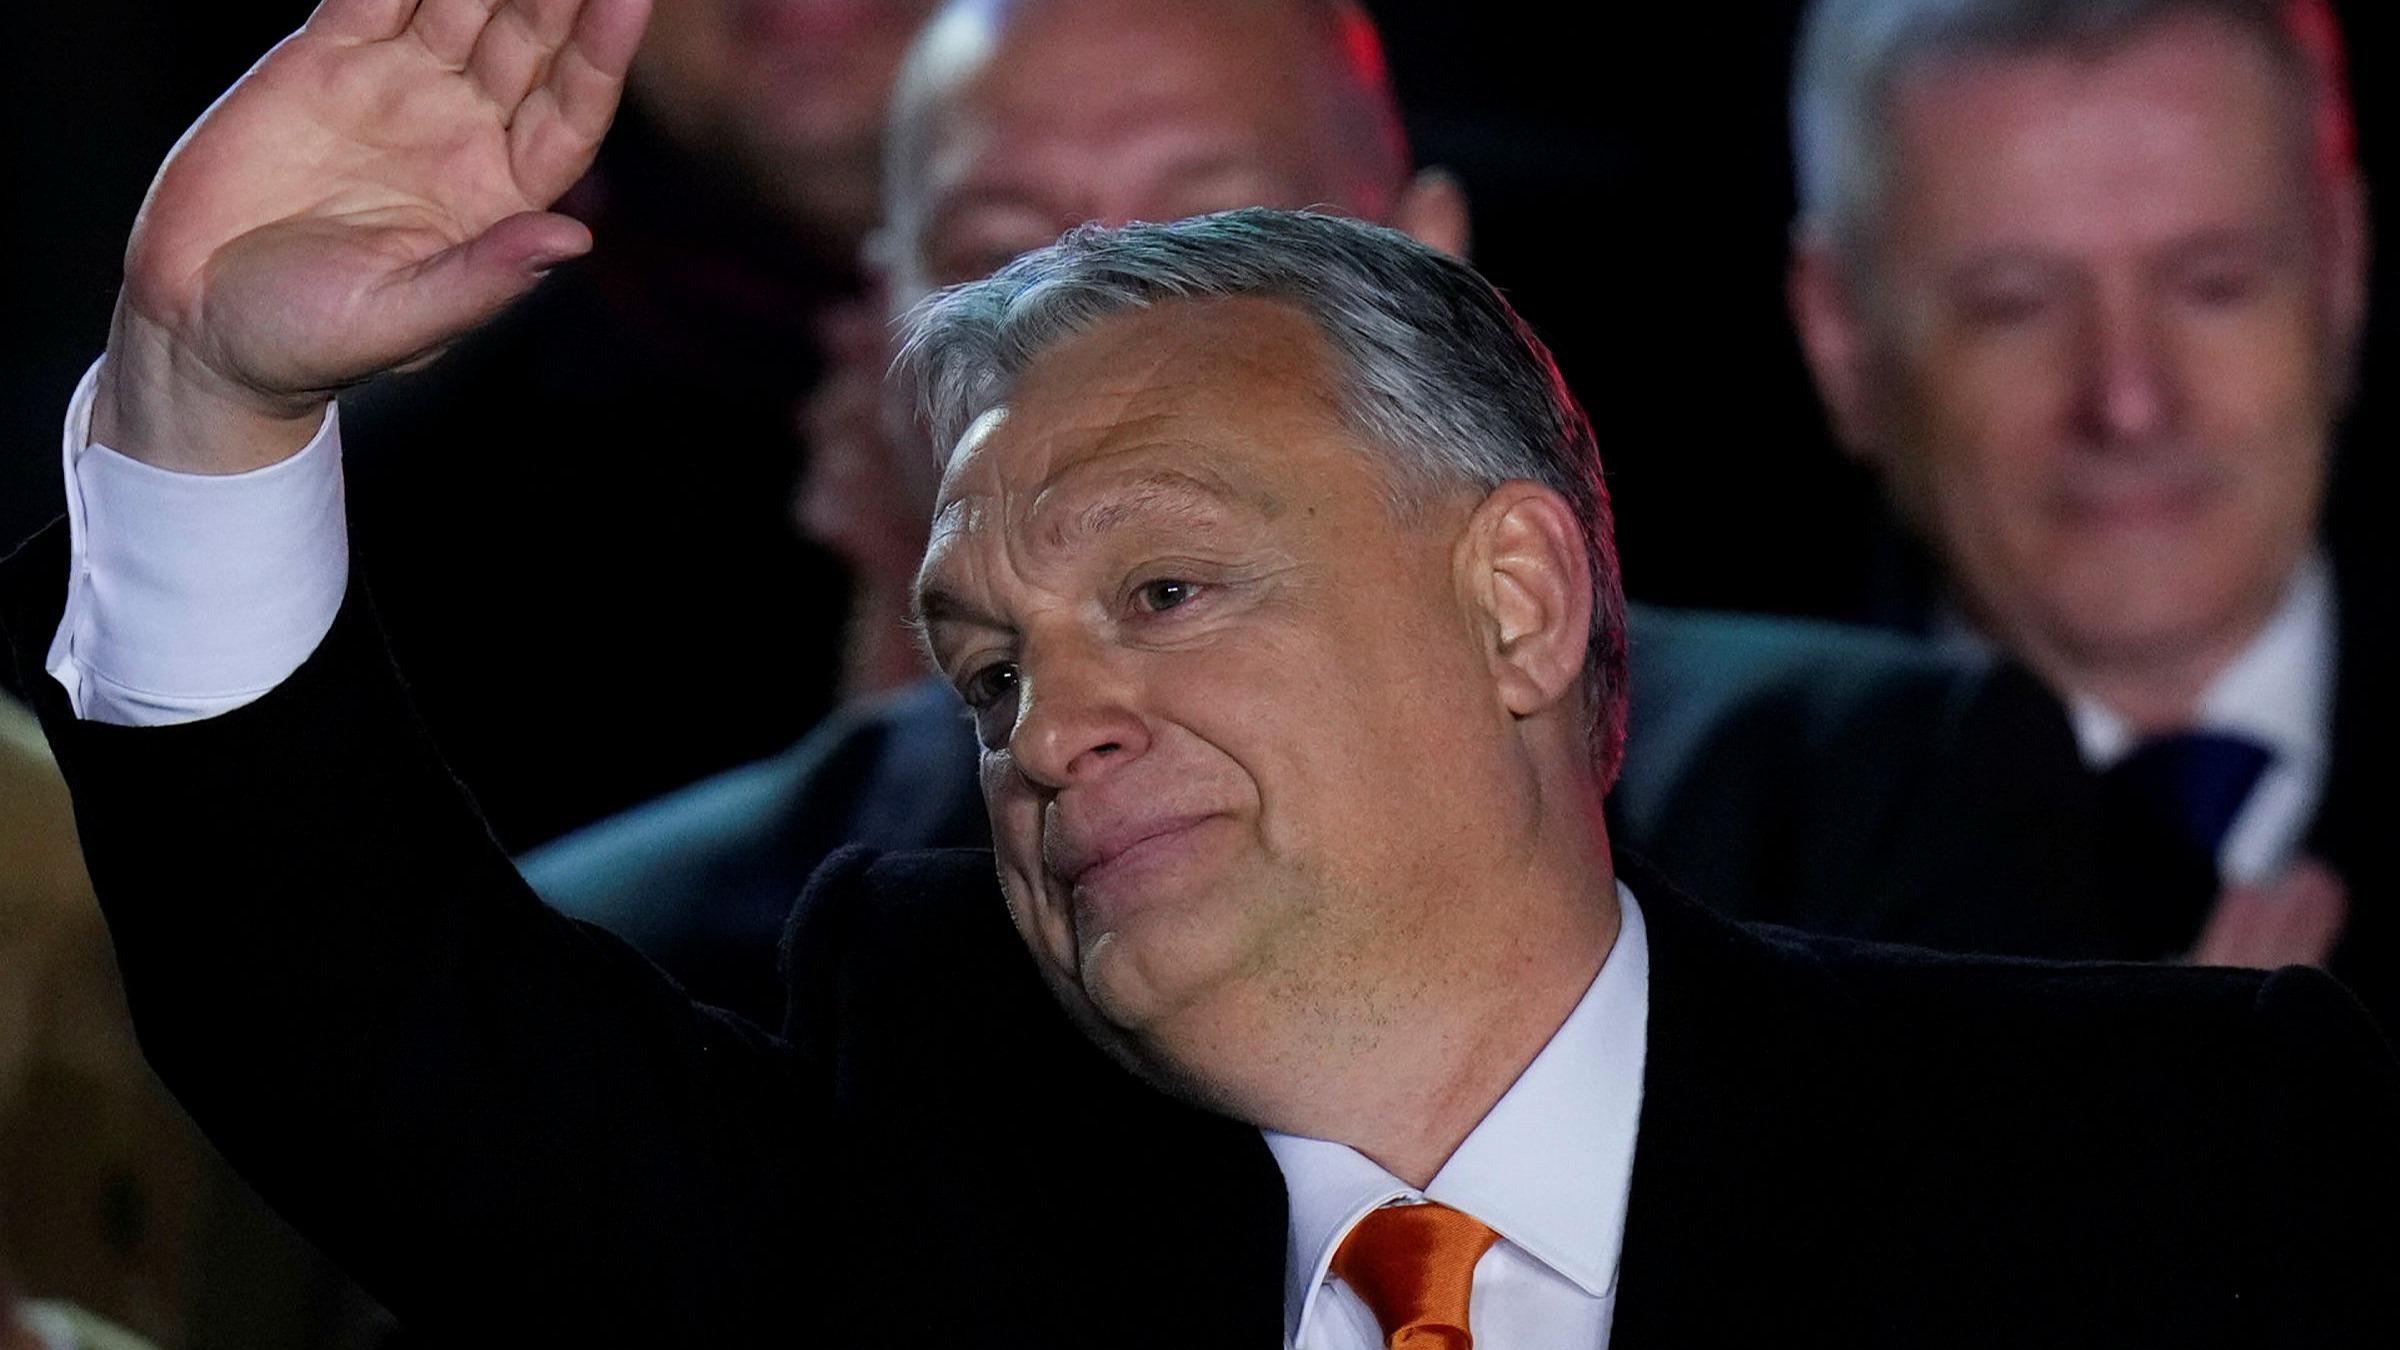 Viktor Orban wins Fourth Term as Prime Minister of Hungary_30.1